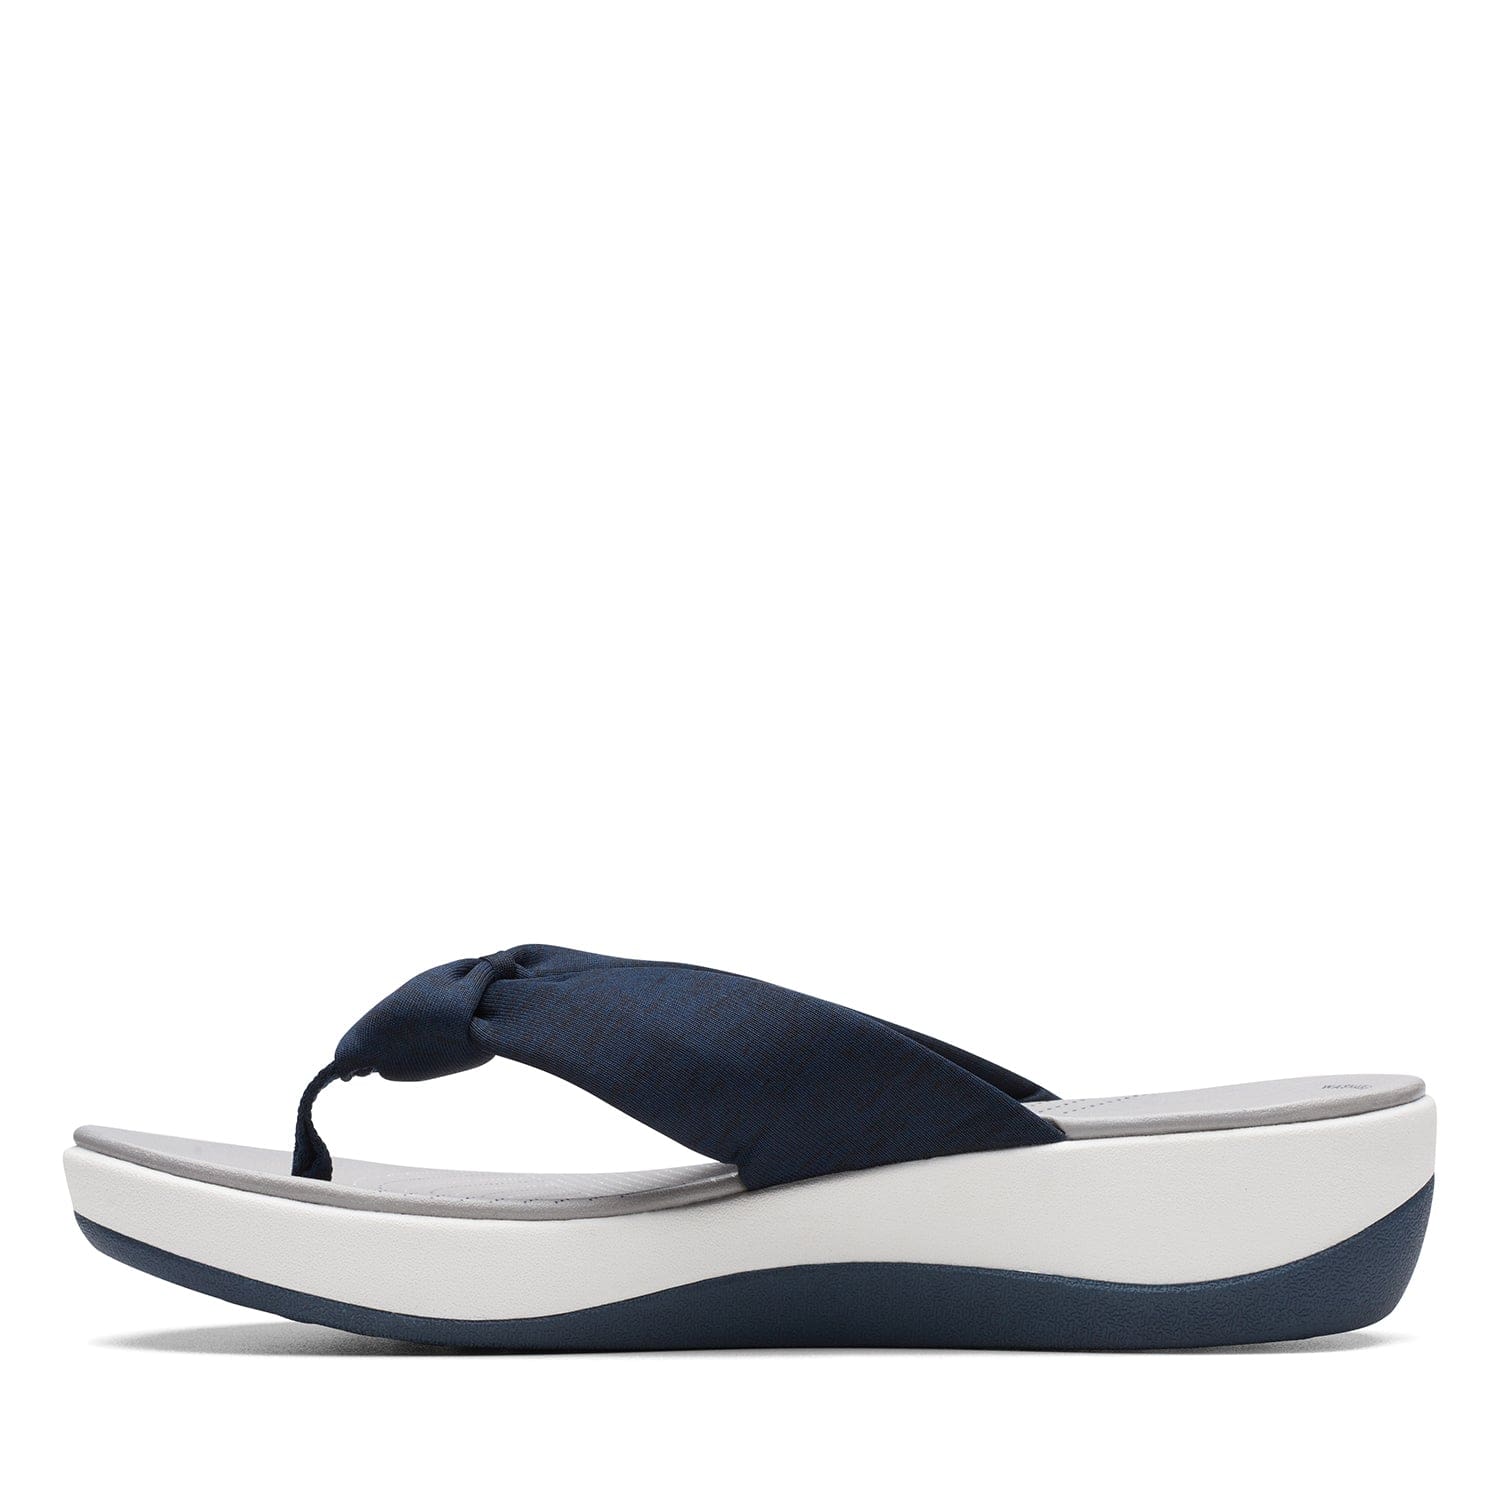 Clarks Arla Glison 2 - Sandals - Blue Fabric - 261752564 - D Width (Standard Fit)